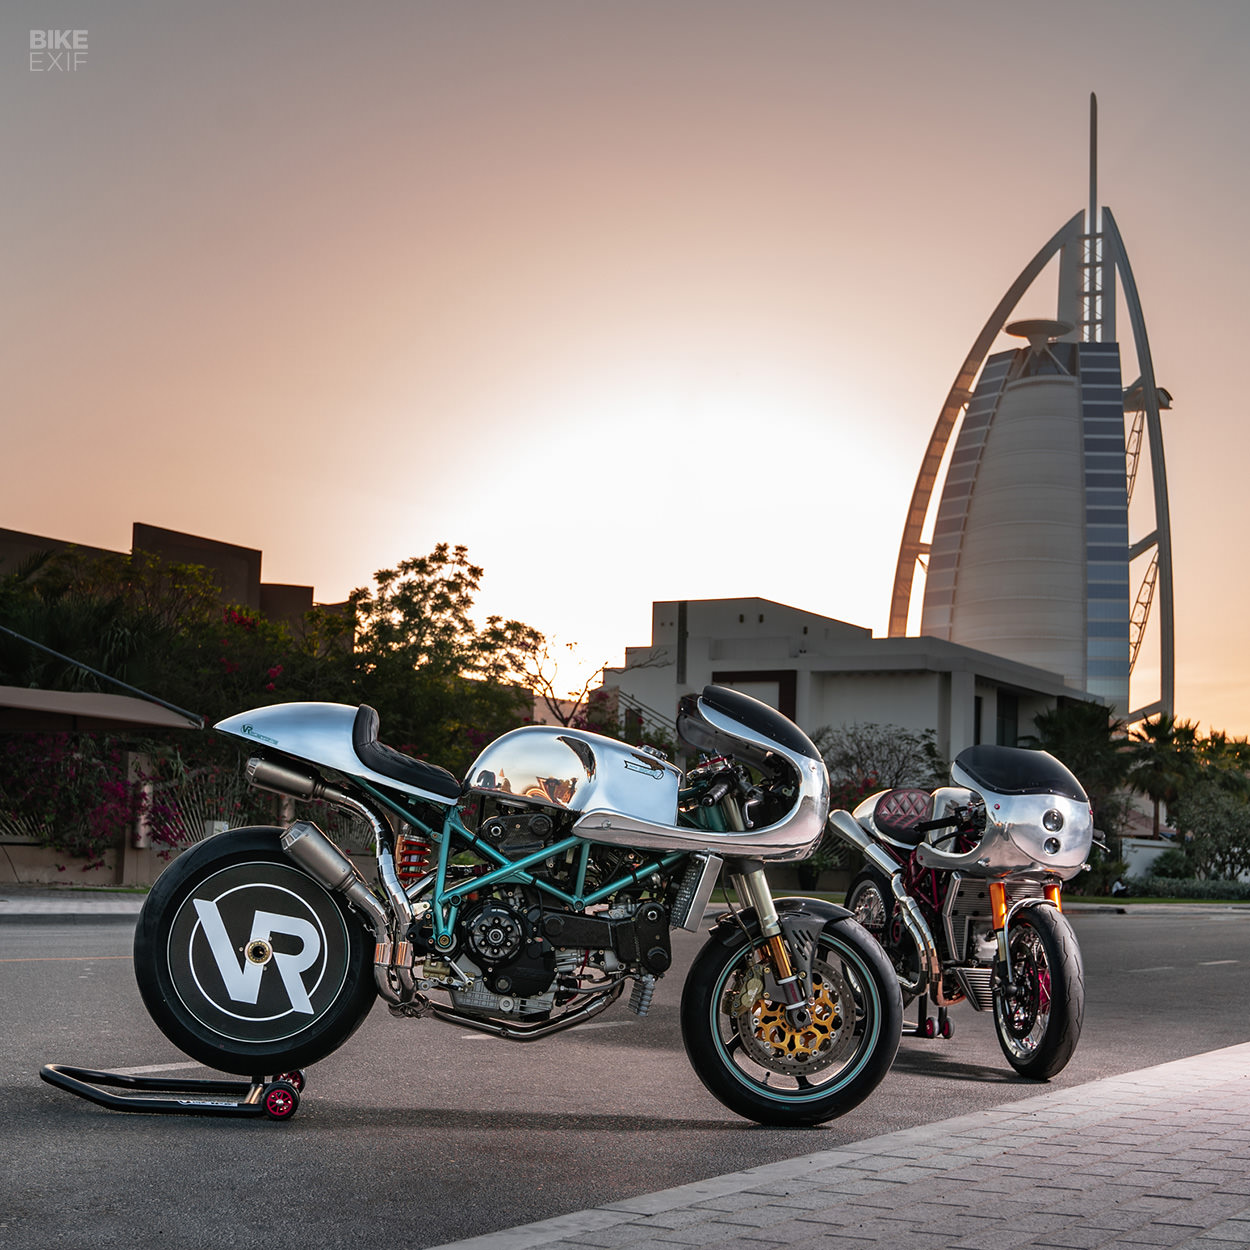 Ducati 996 cafe racer by VR Customs